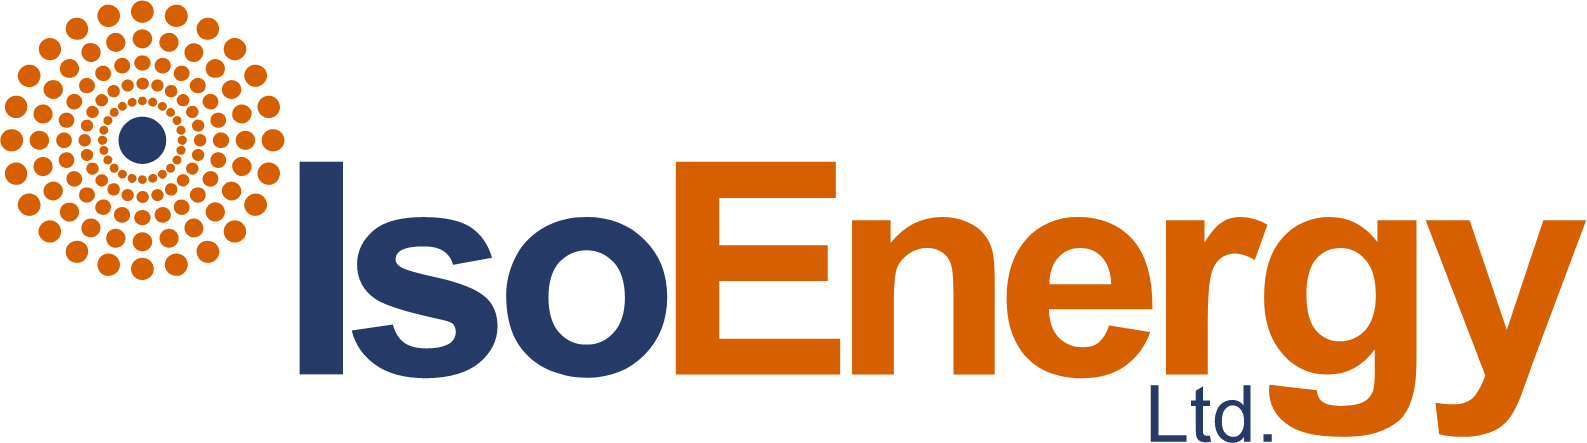 IsoEnergy logo large (transparent PNG)